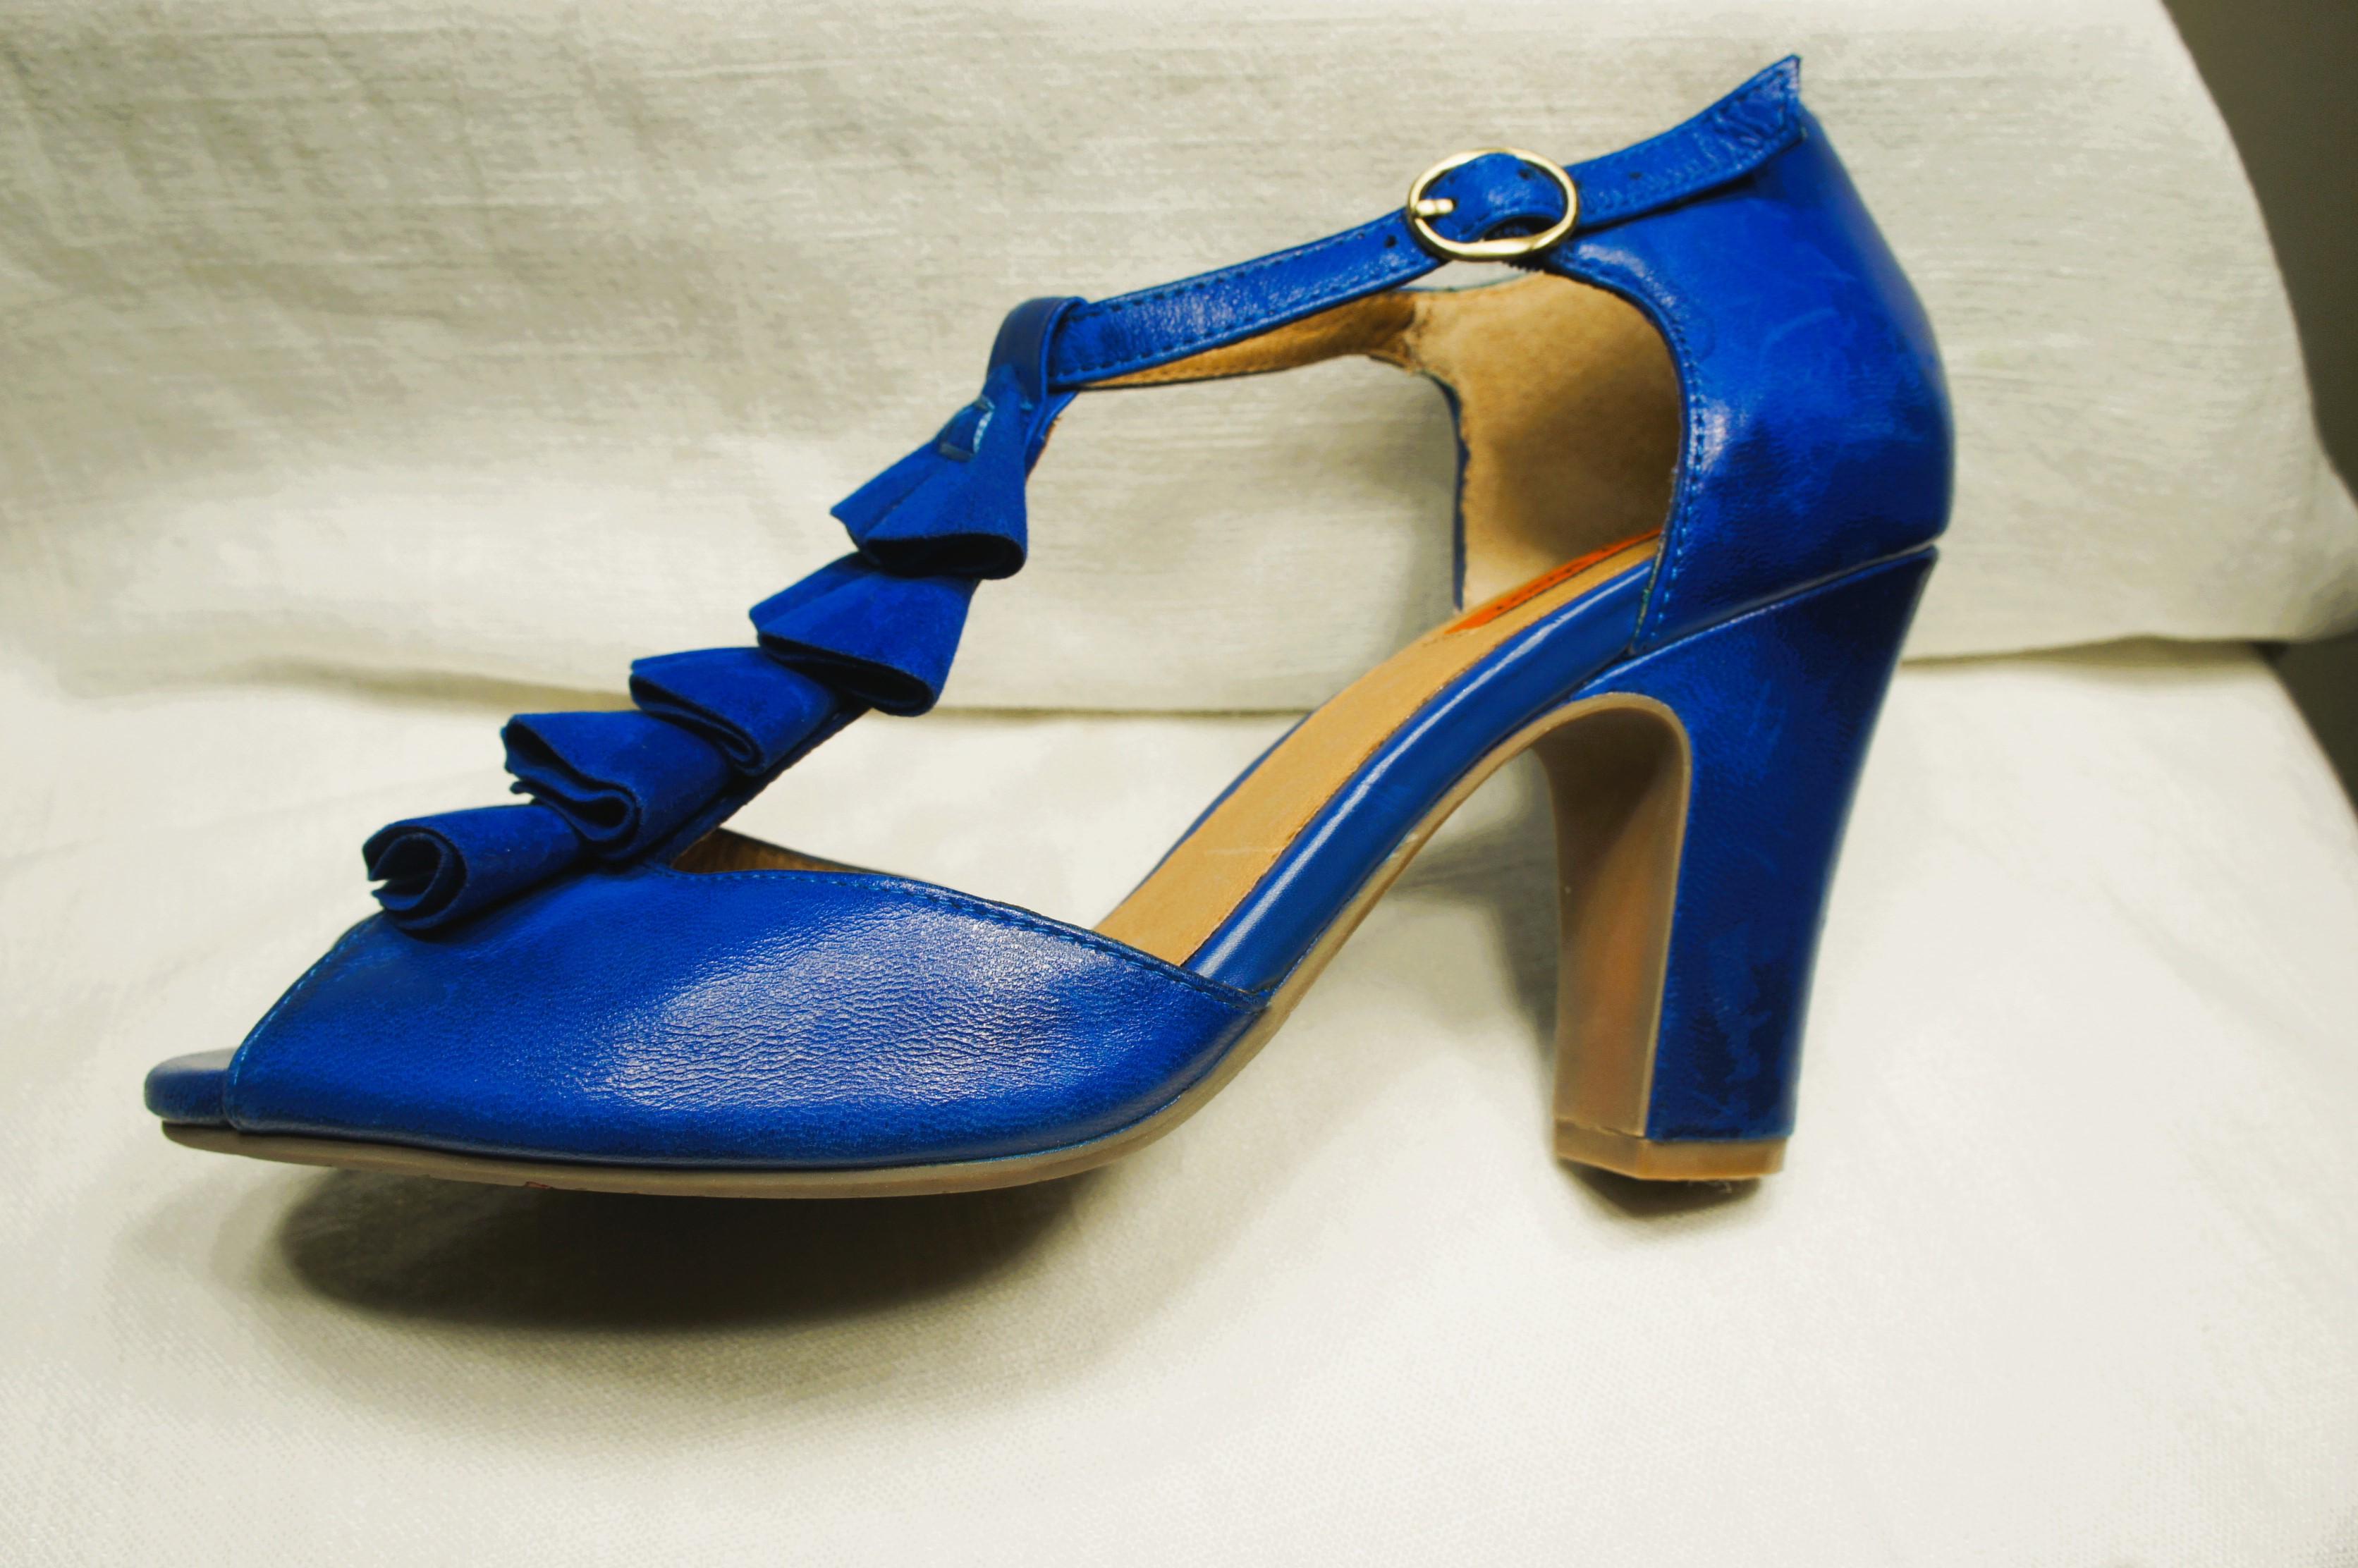 Miz Mooz Blue Leather & Suede Ruffle Salsa Shoes